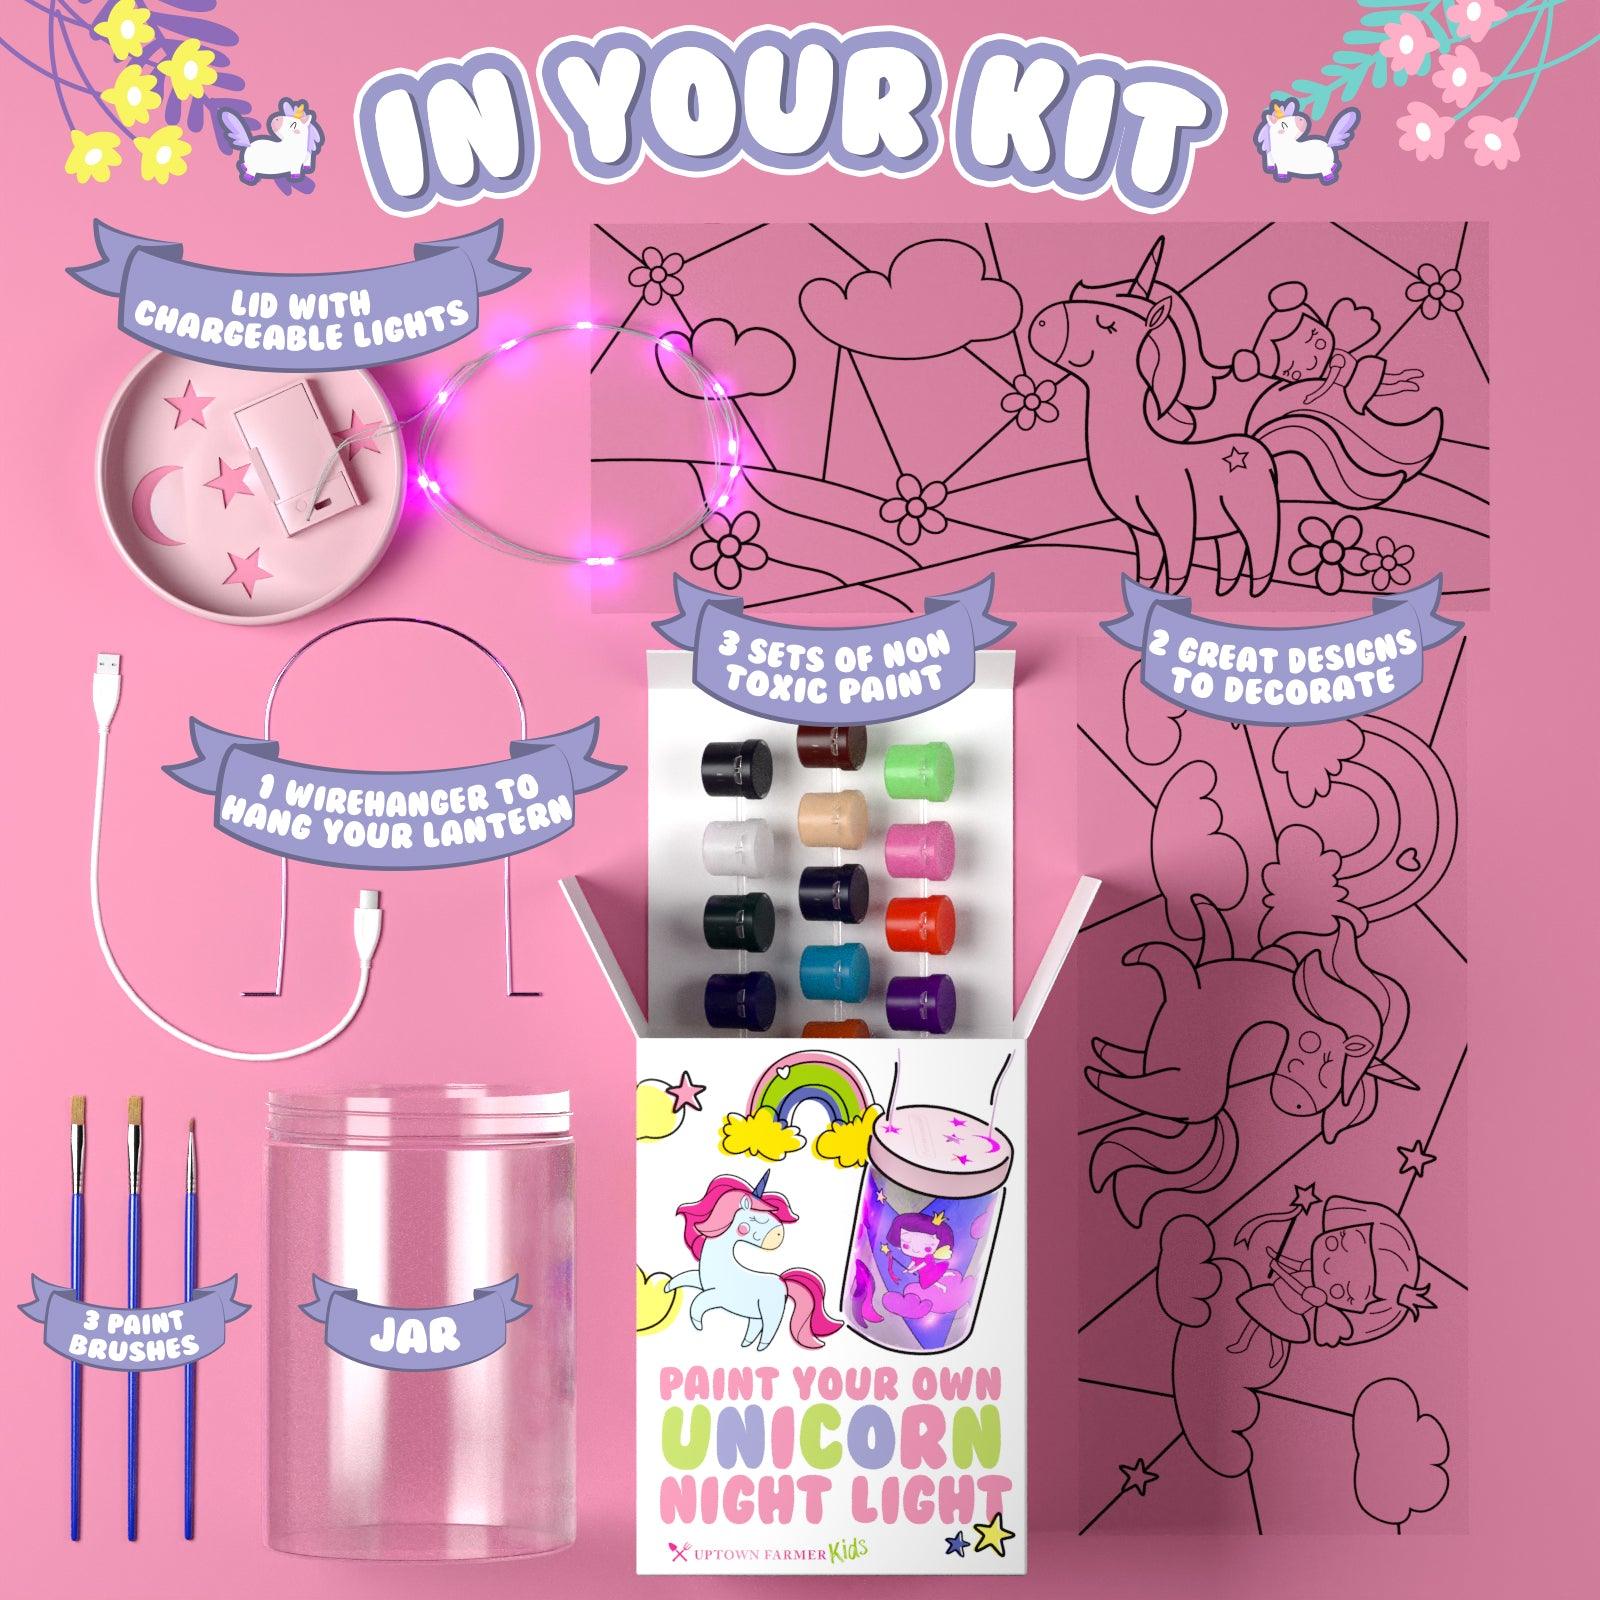 DIY Unicorn Night Light / Lantern Craft Kit Create Unicorn Bedroom Decor  With This Arts & Crafts Kit for Kids 